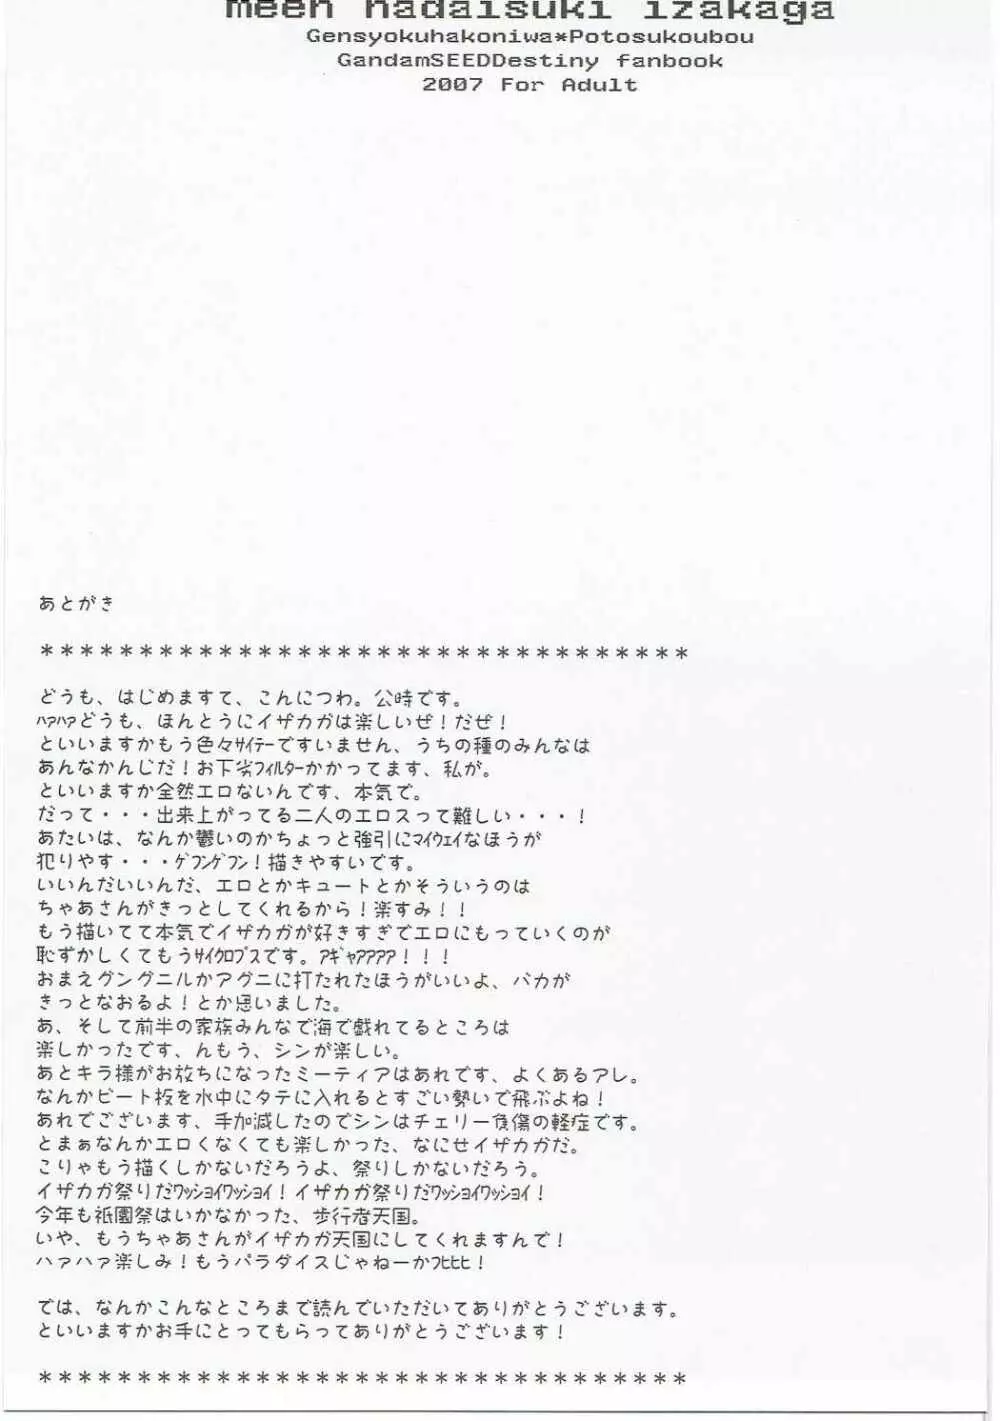 meen na daisuki イザカガ Page.9